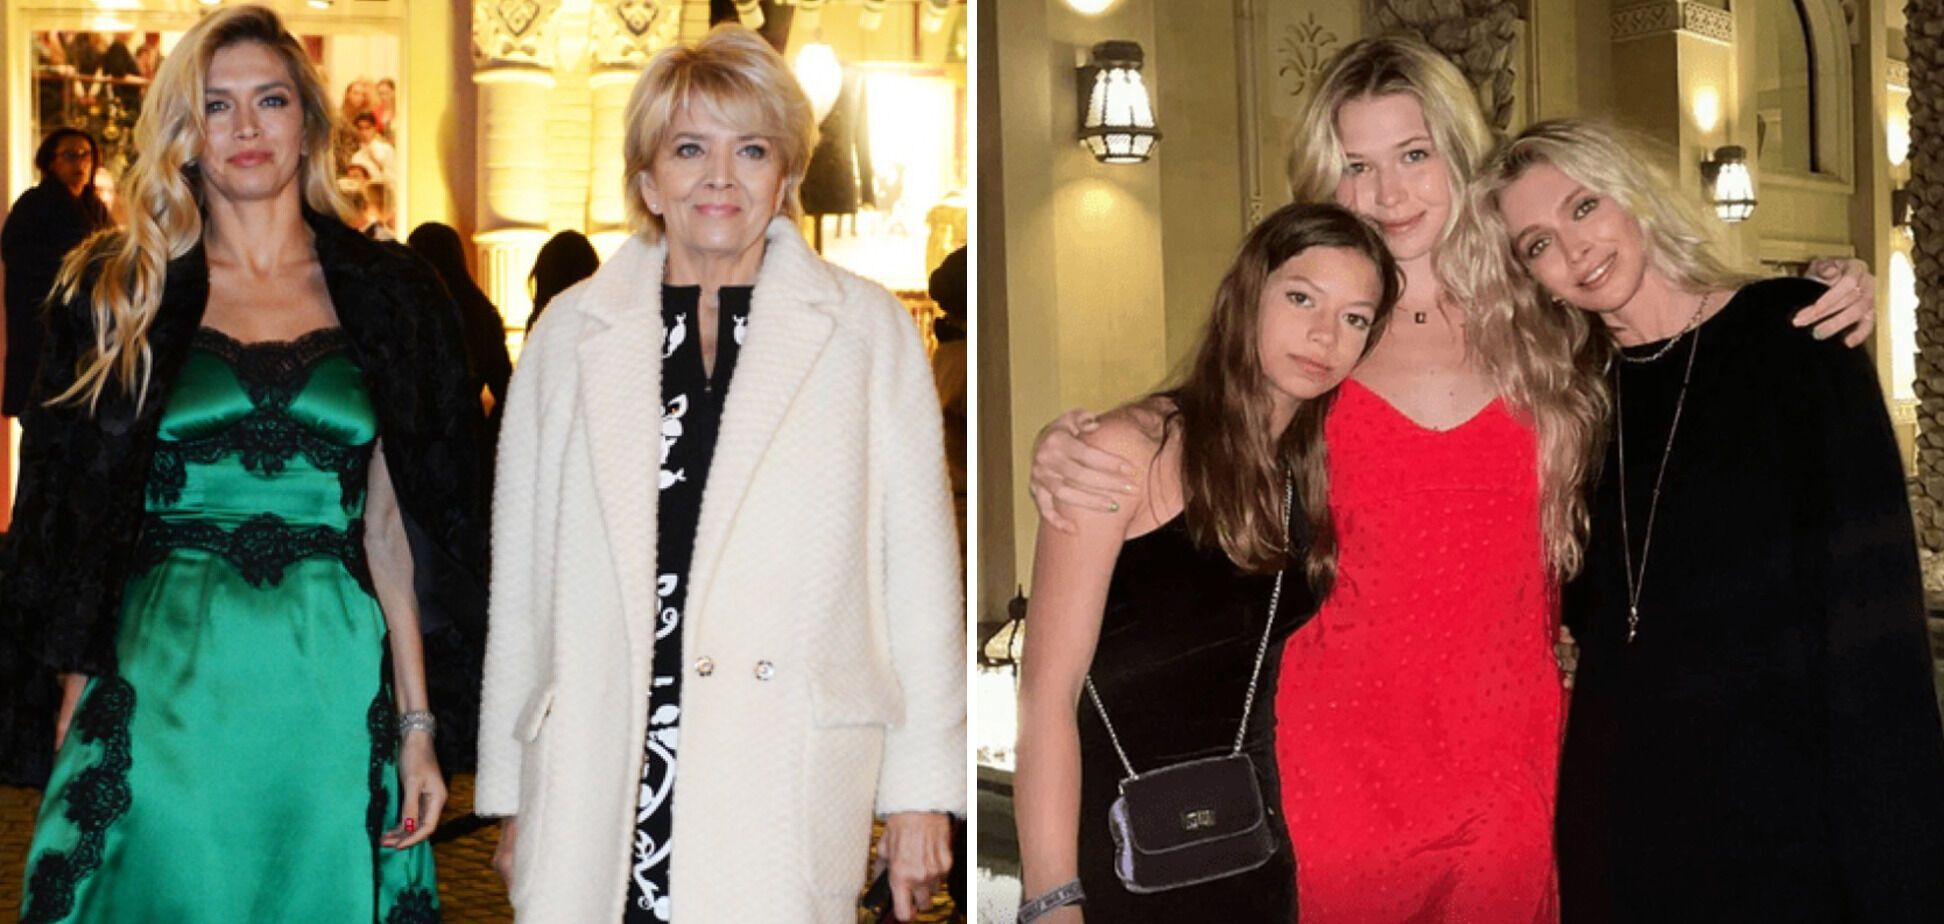 Matvienko, Rogovtseva, Polyakova and other celebrities who have proven the strong bond between three generations of women. Photos.